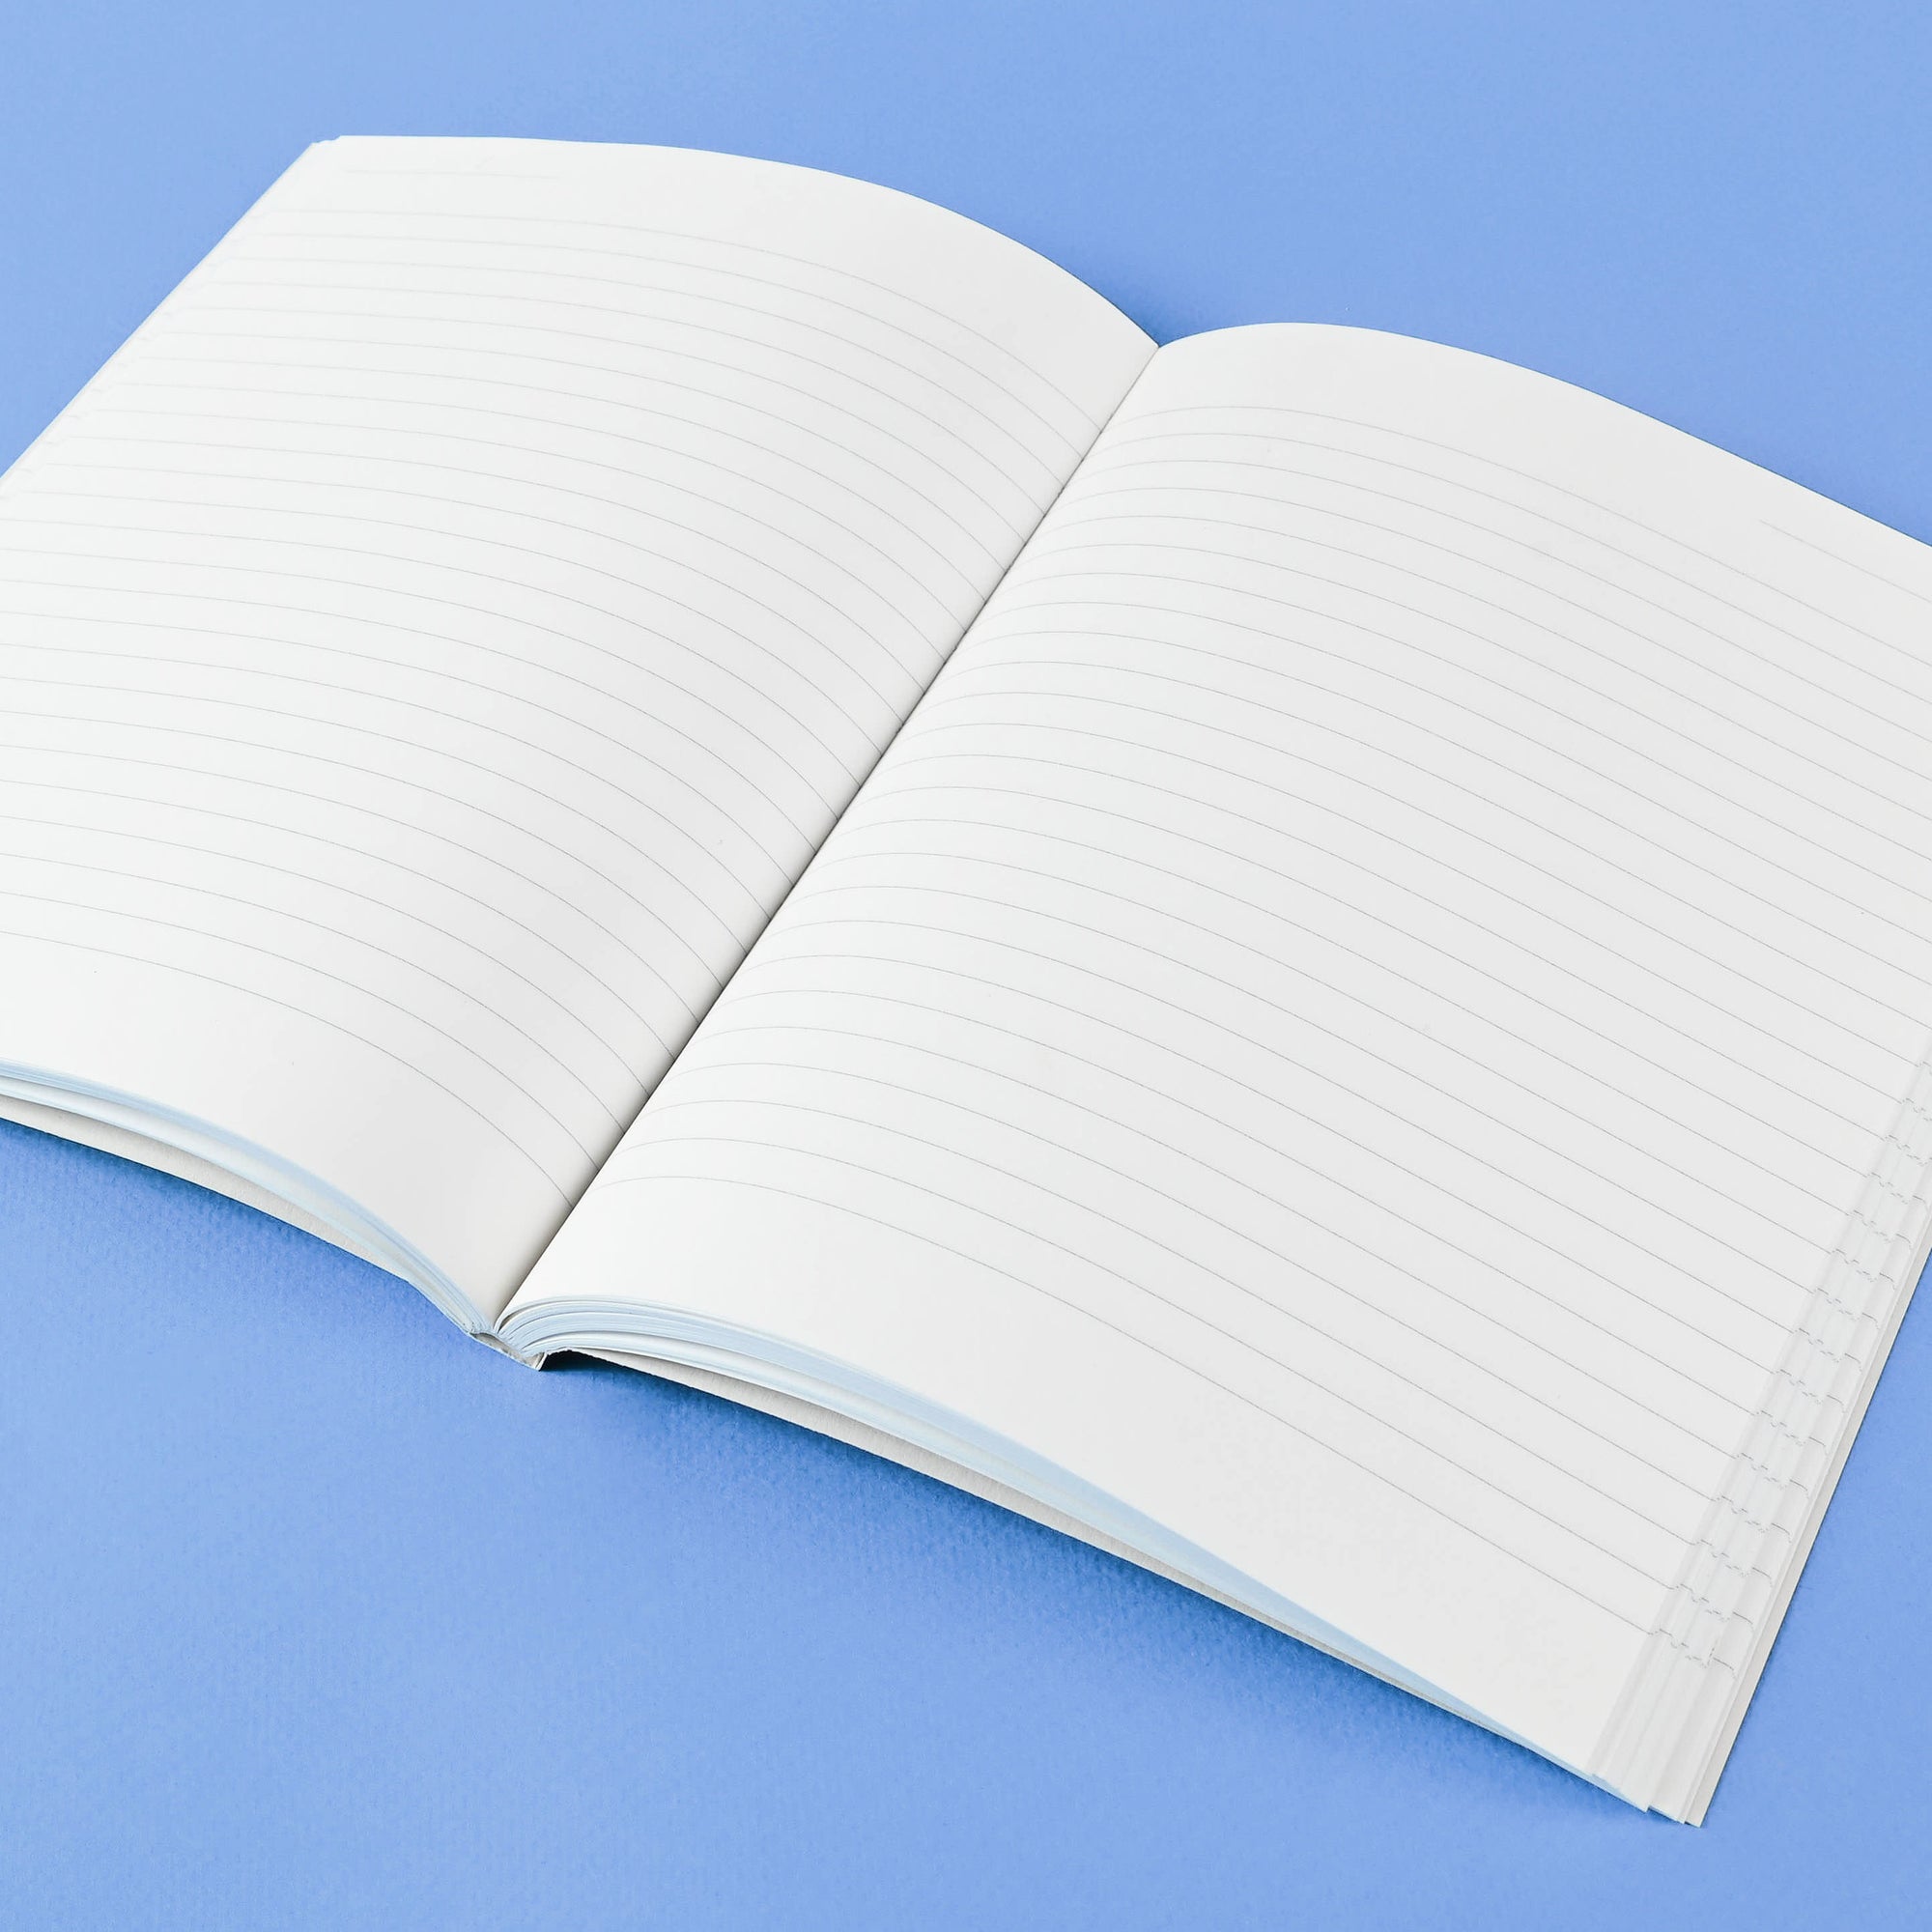 Wrap Objects Layflat Notebook 